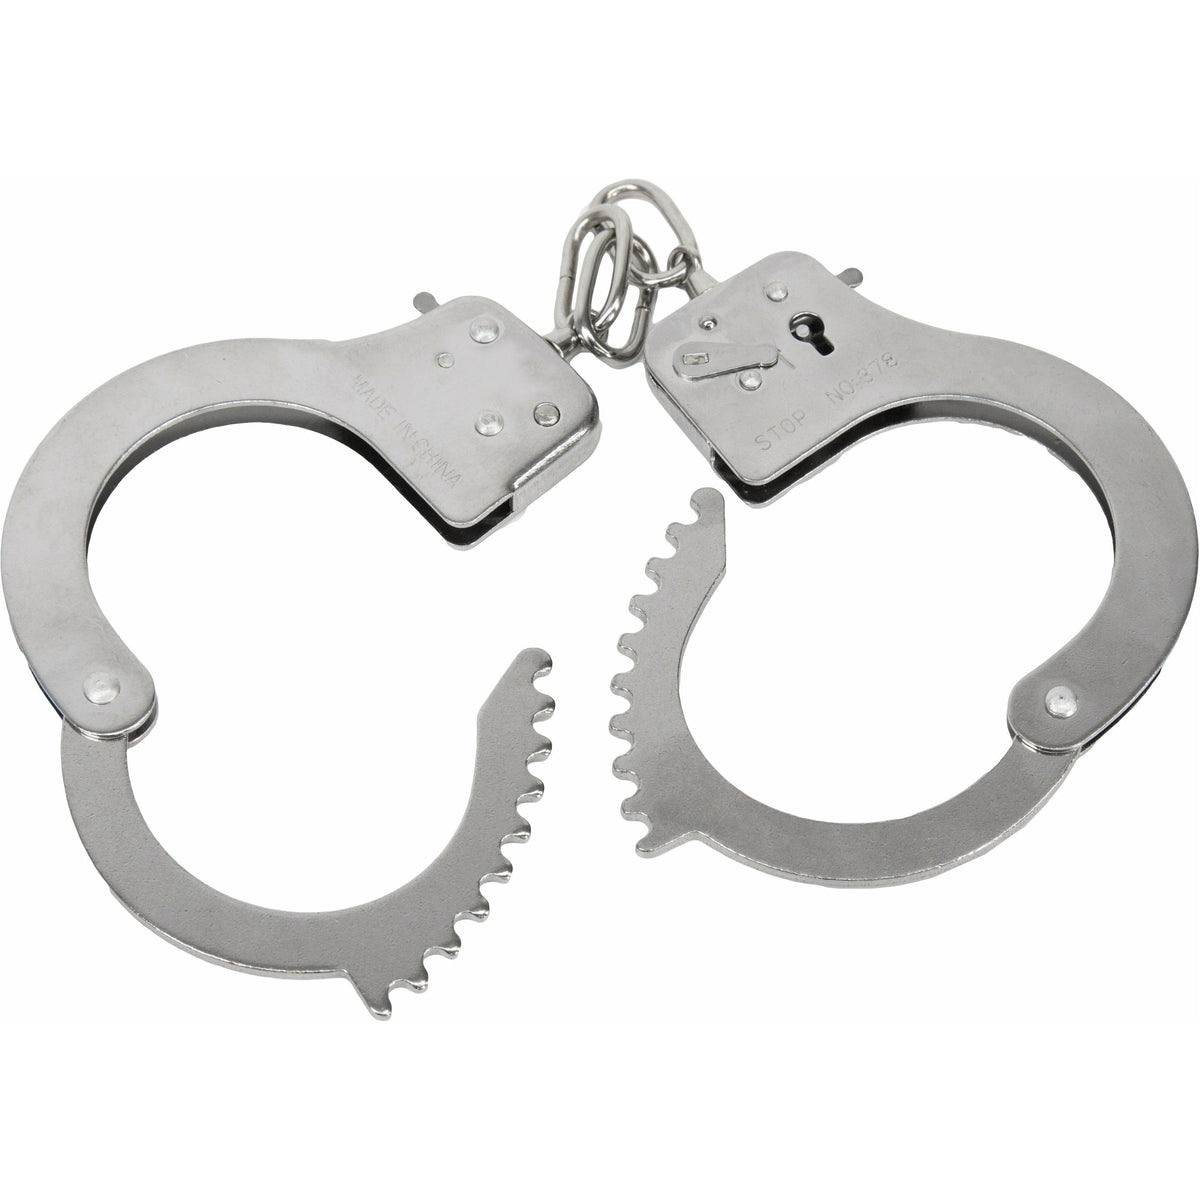 BDSM Metal Handcuffs